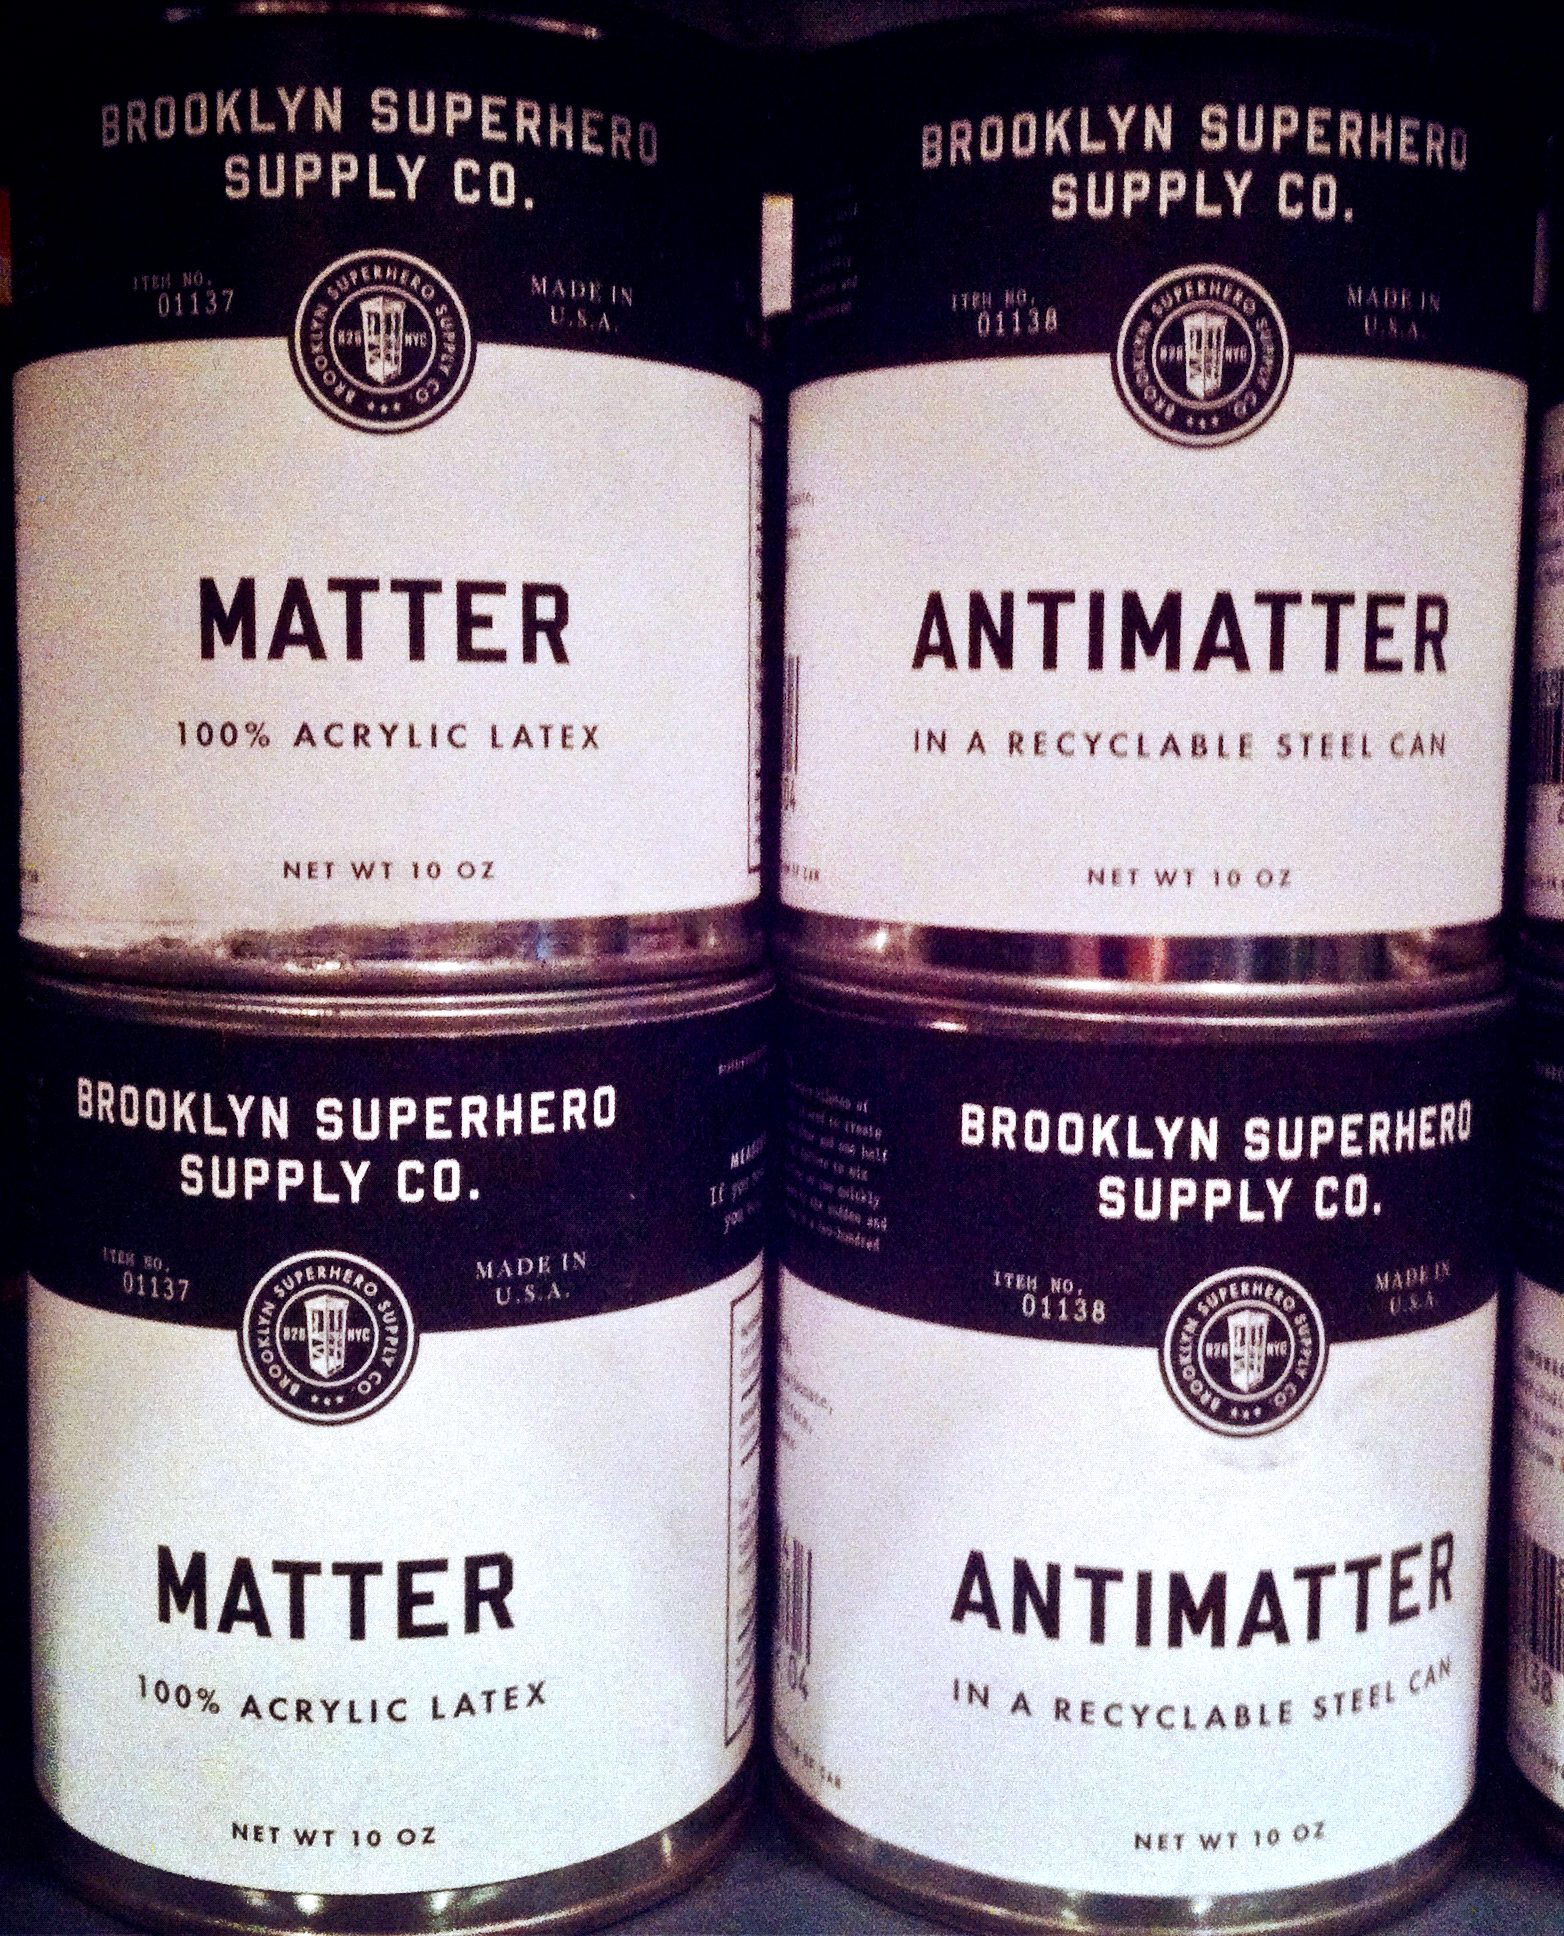 Brooklyn Superhero Supply Co. 的產品，圖片中是 Matter 和 Antimatter